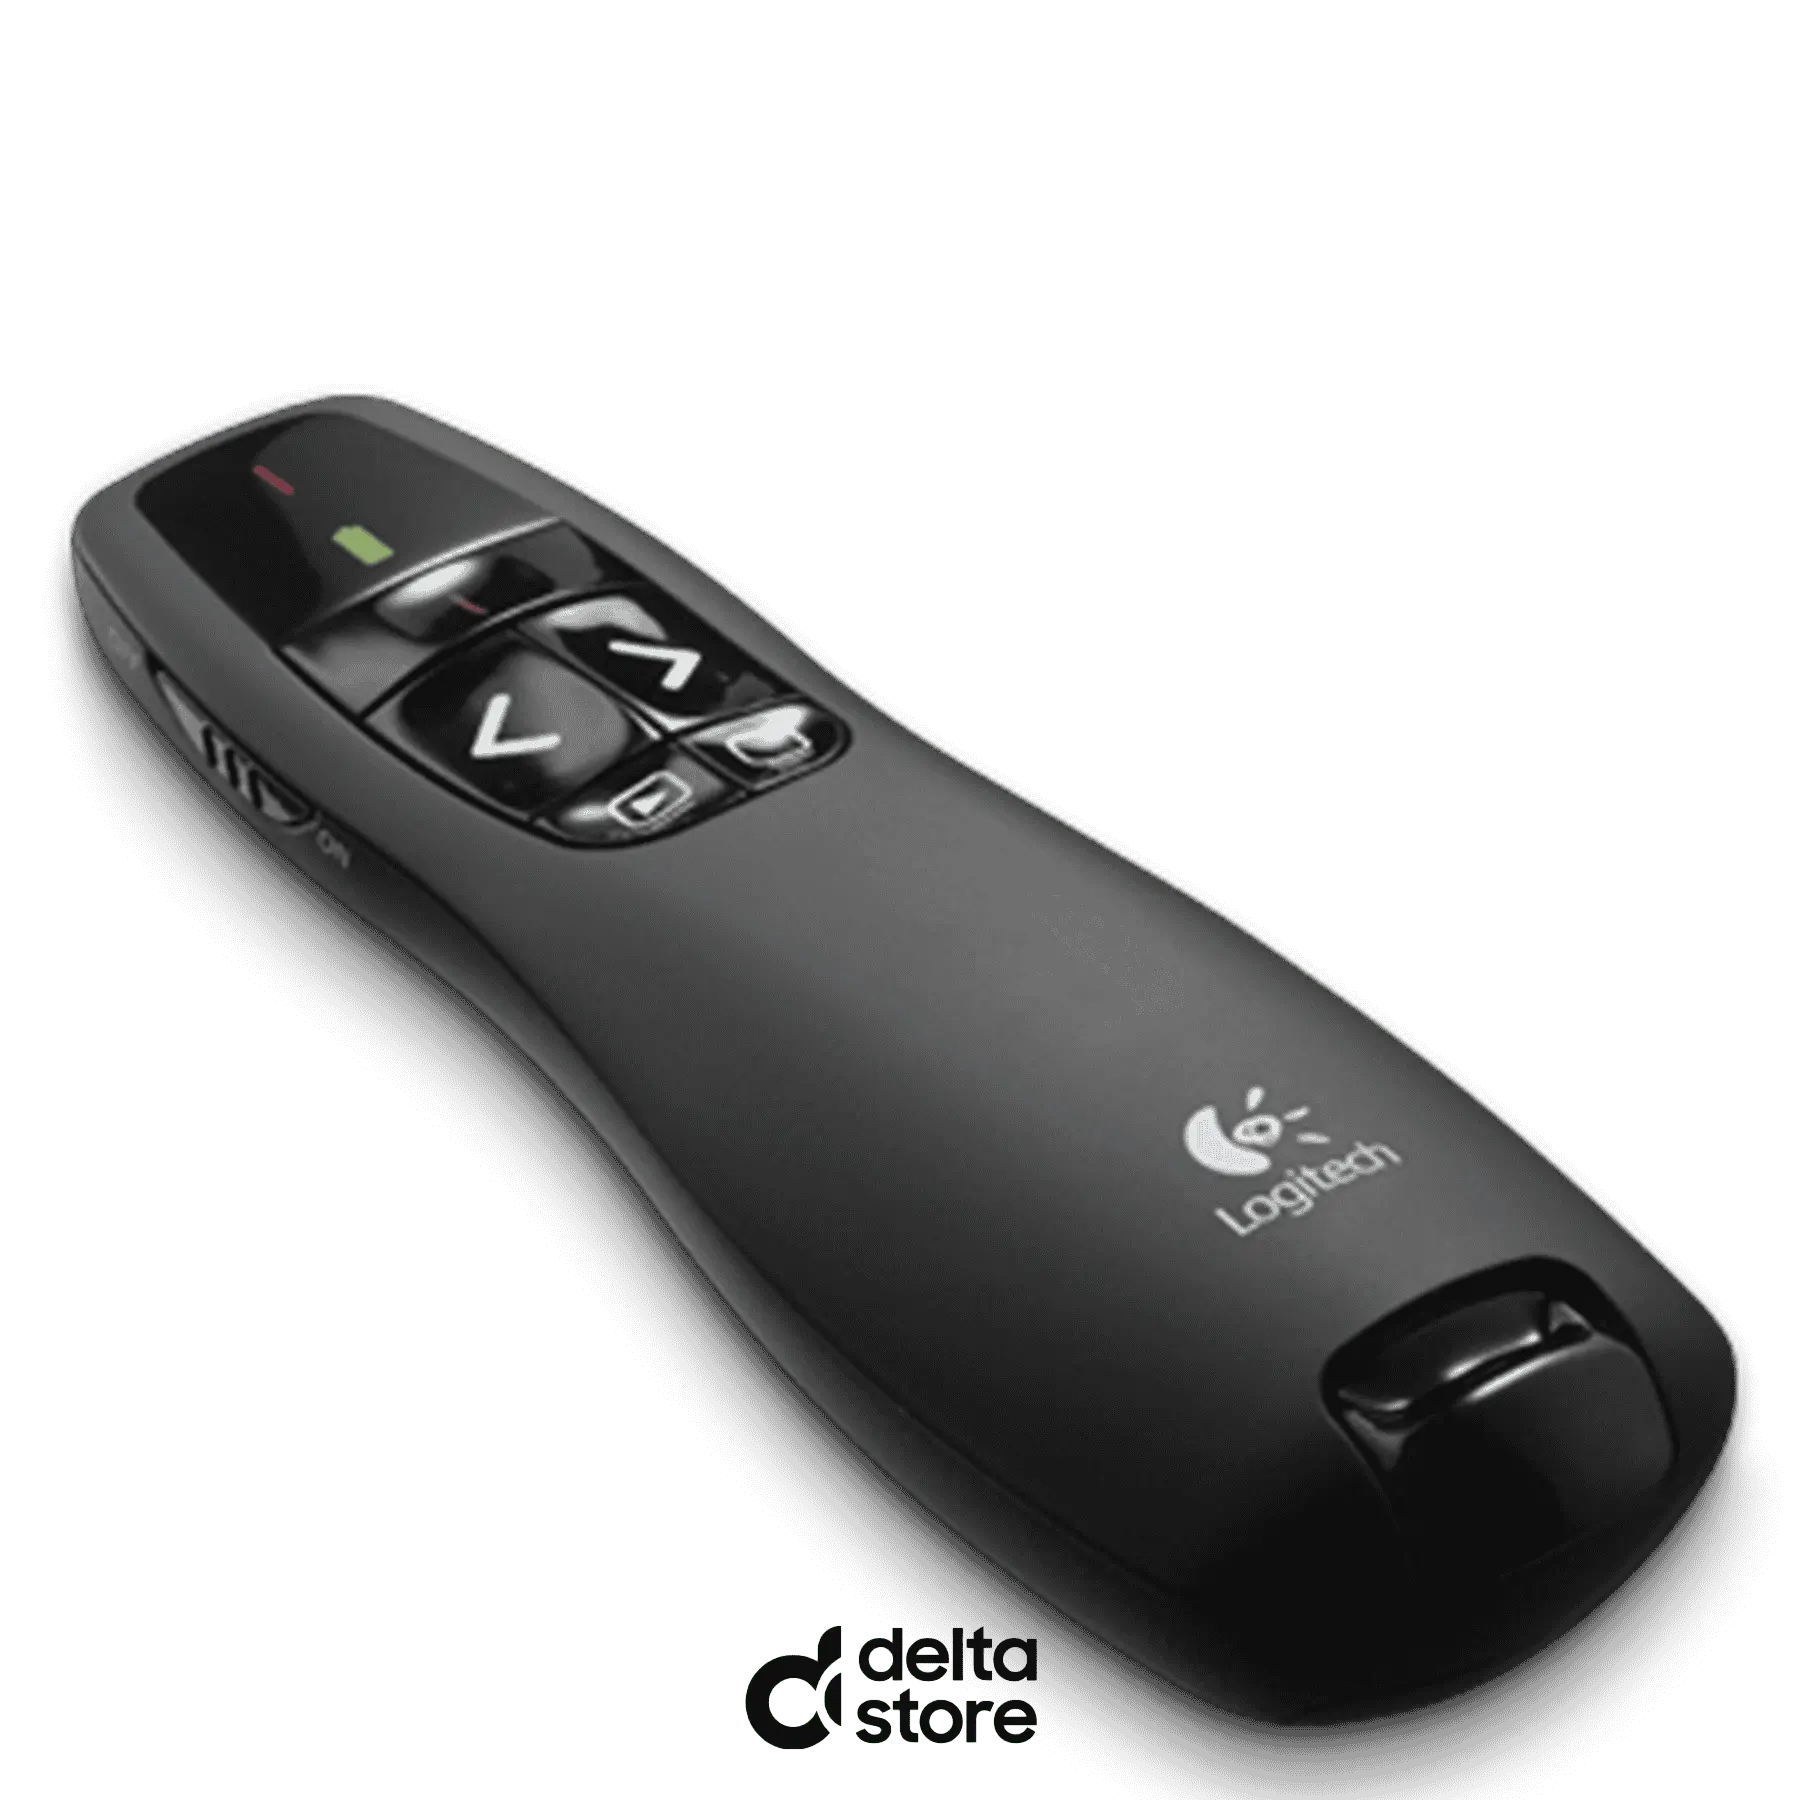 Logitech Wireless R400 Presenter